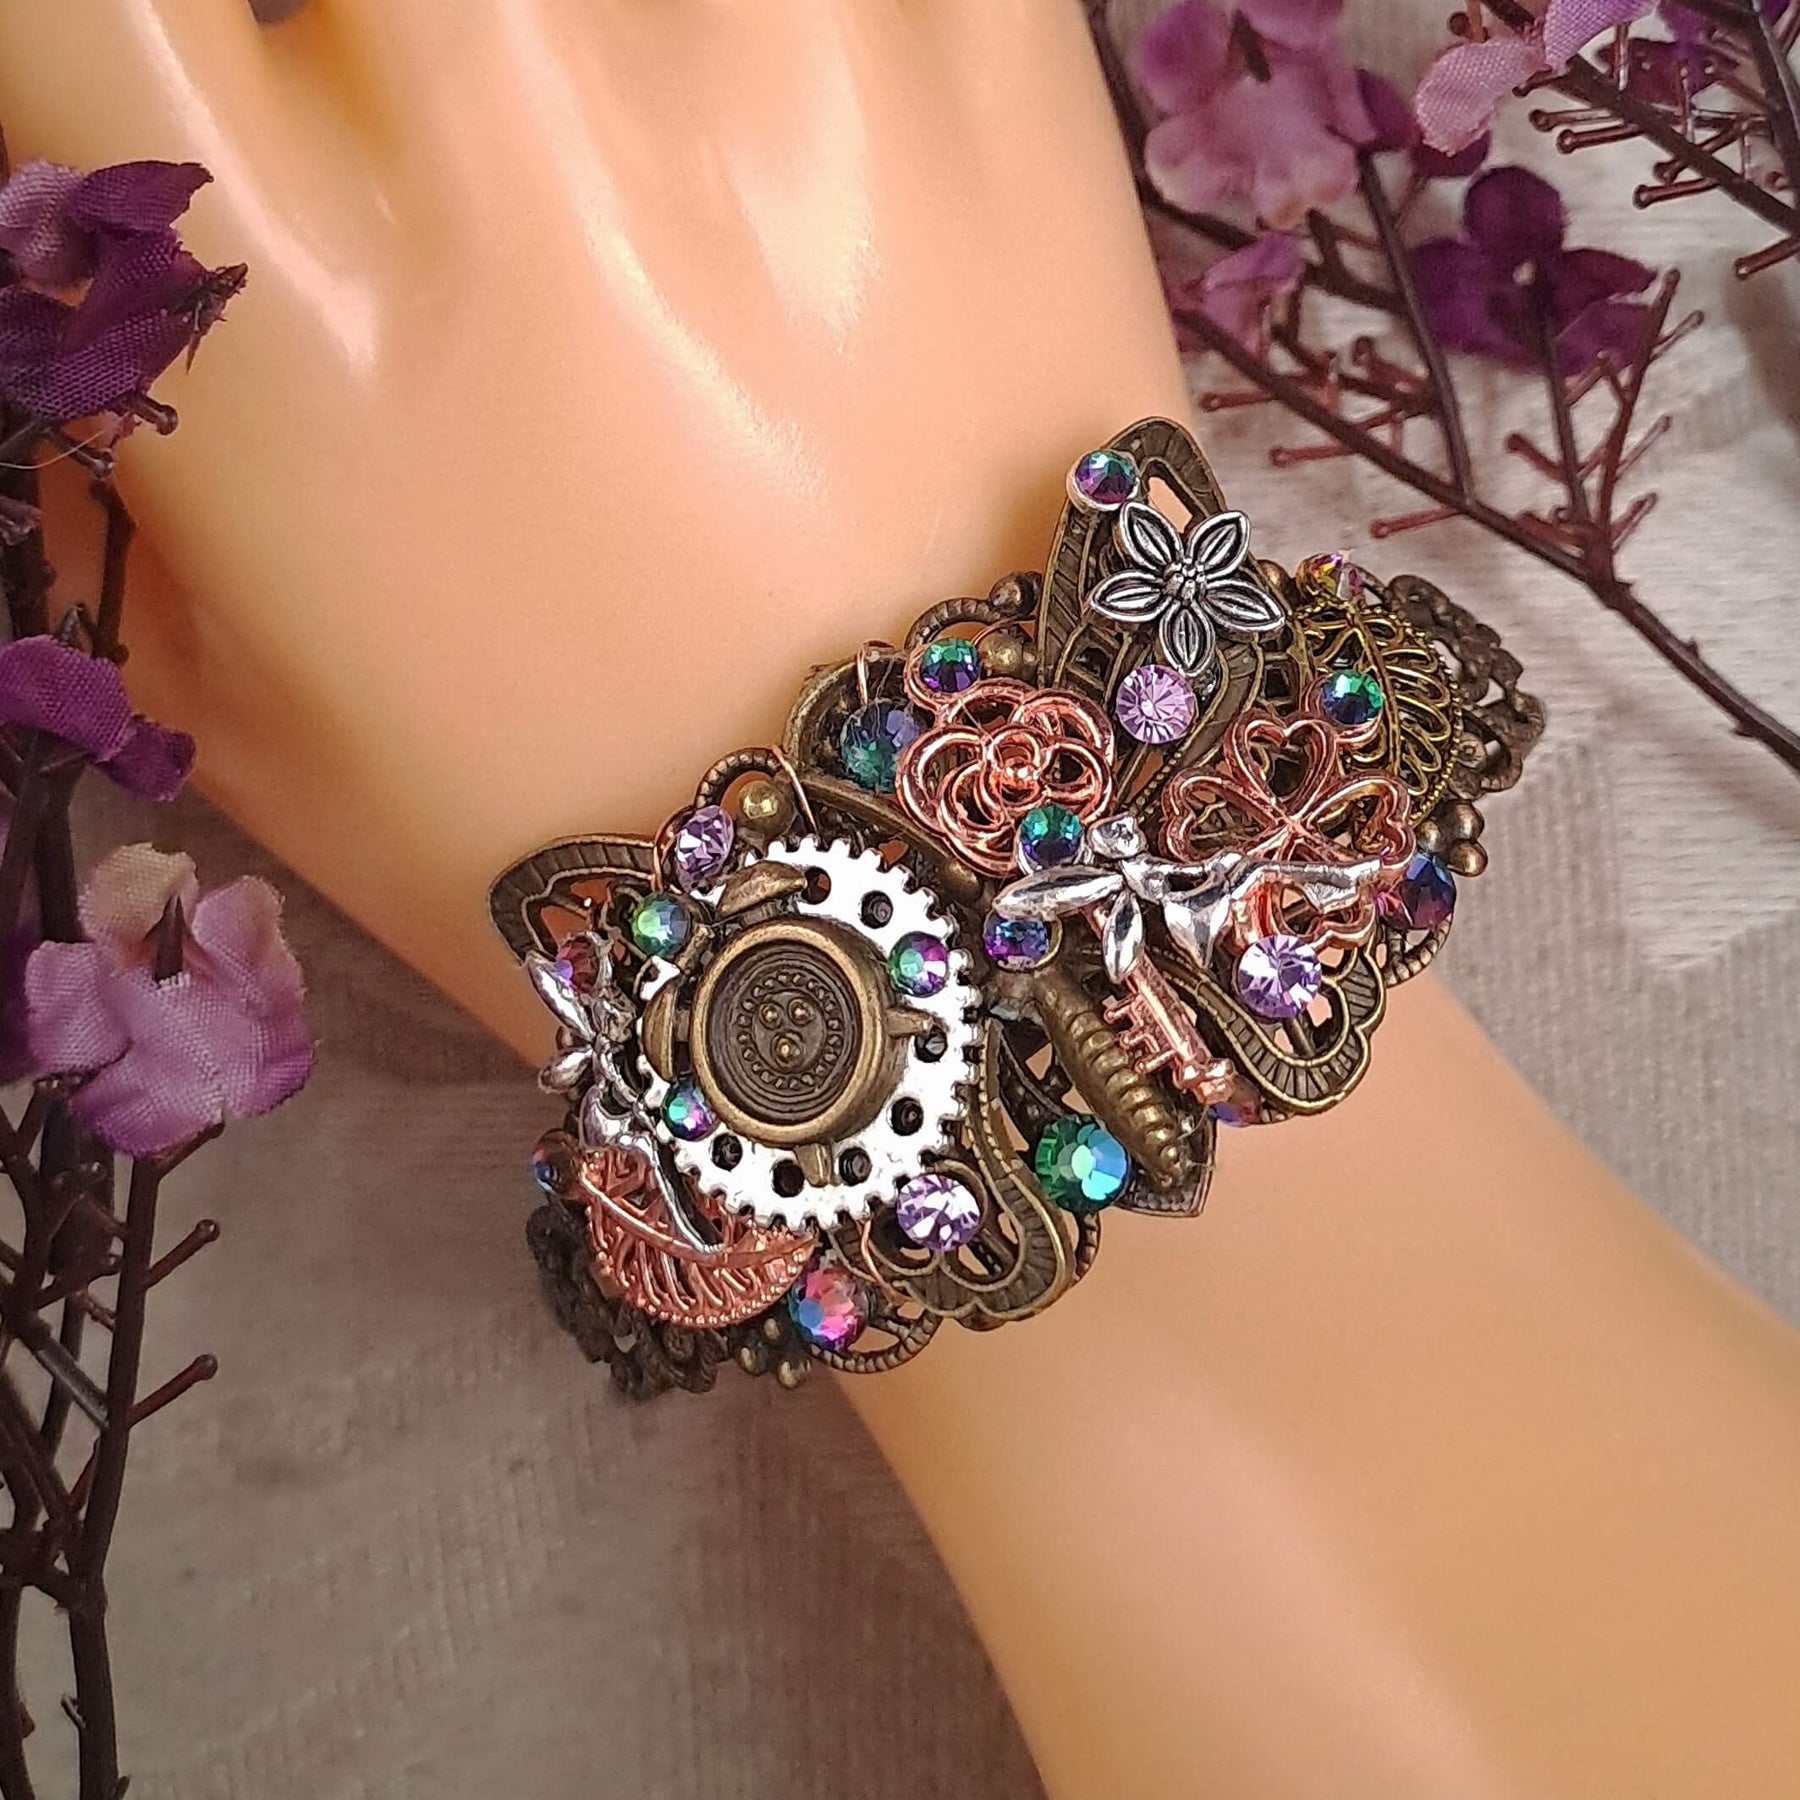 Purple Crystal Butterfly Adjustable Bracelet